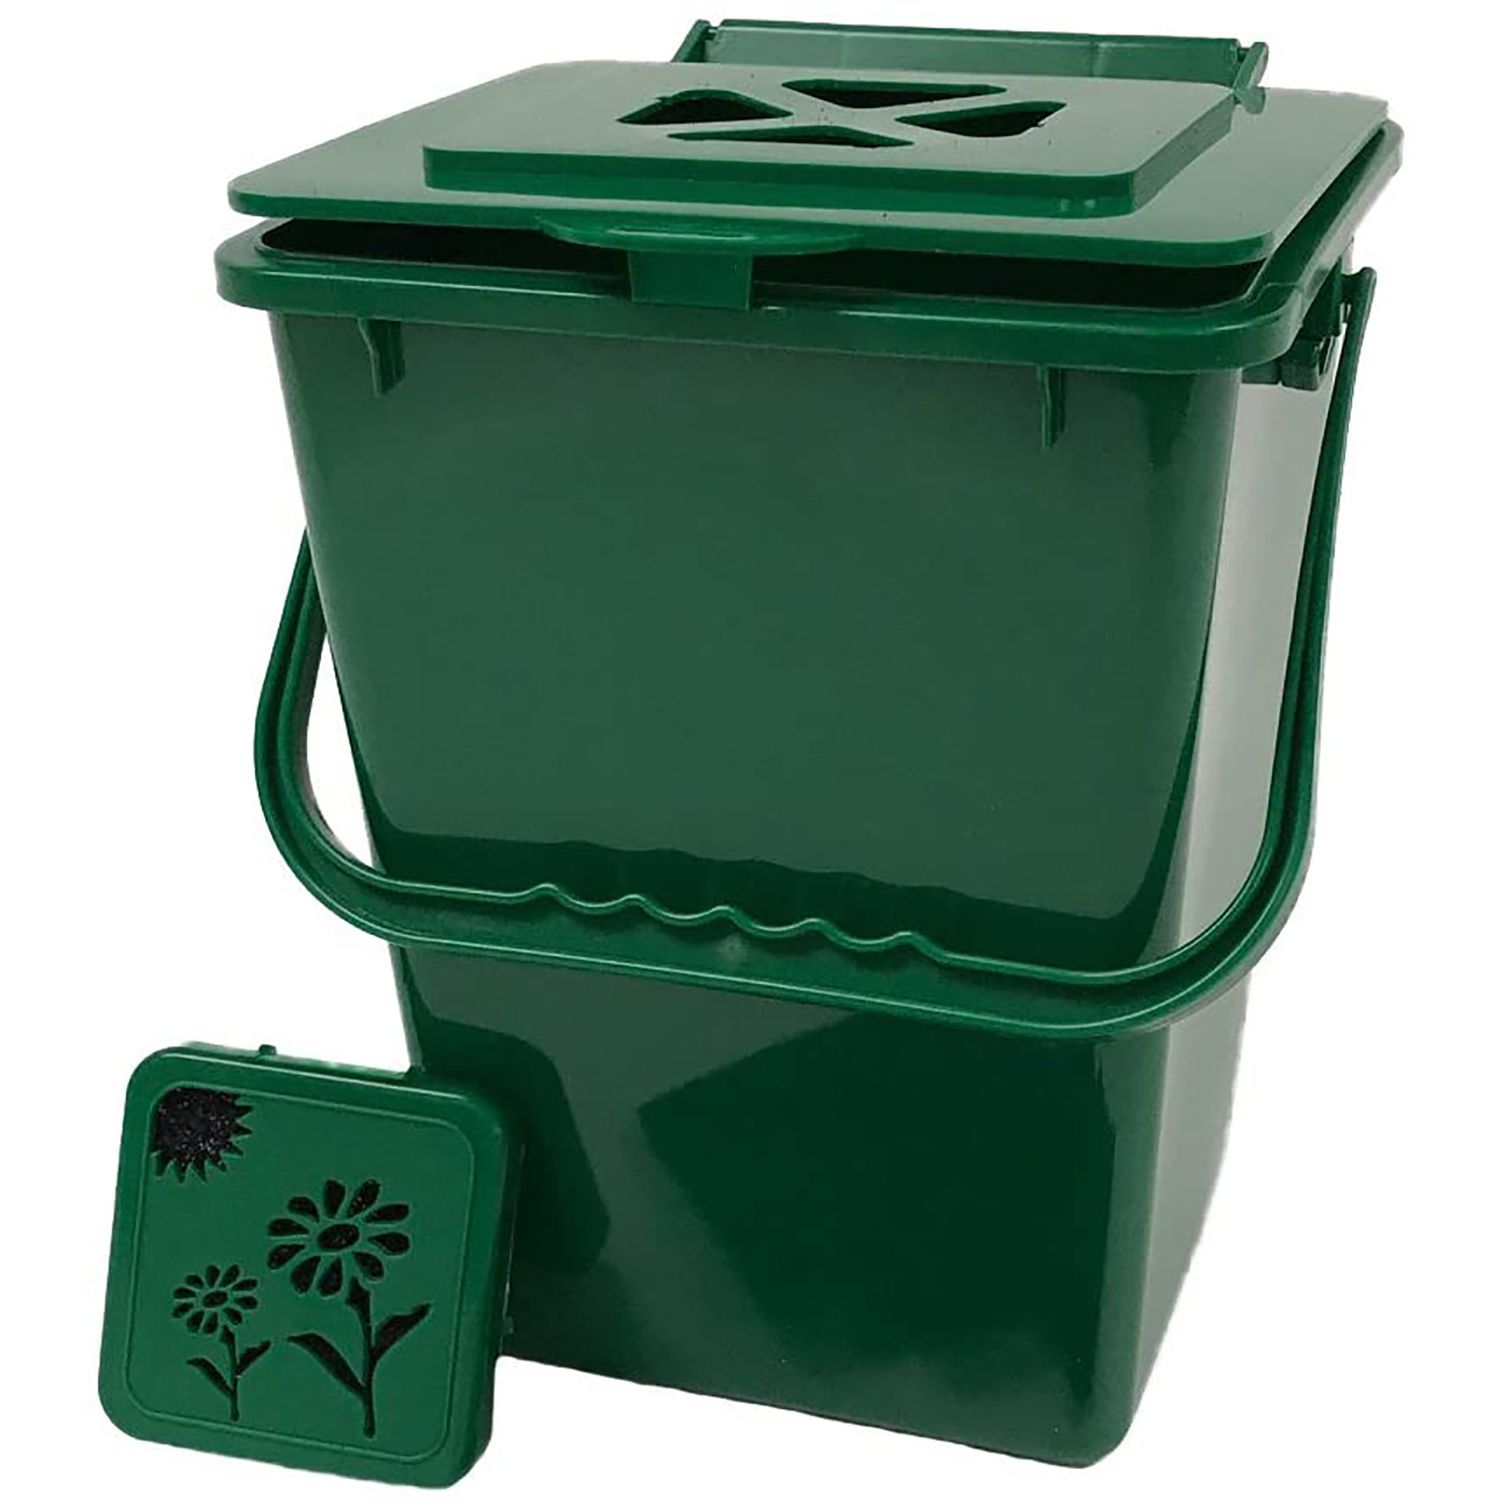 mejores contenedores de compostaje - compost bins